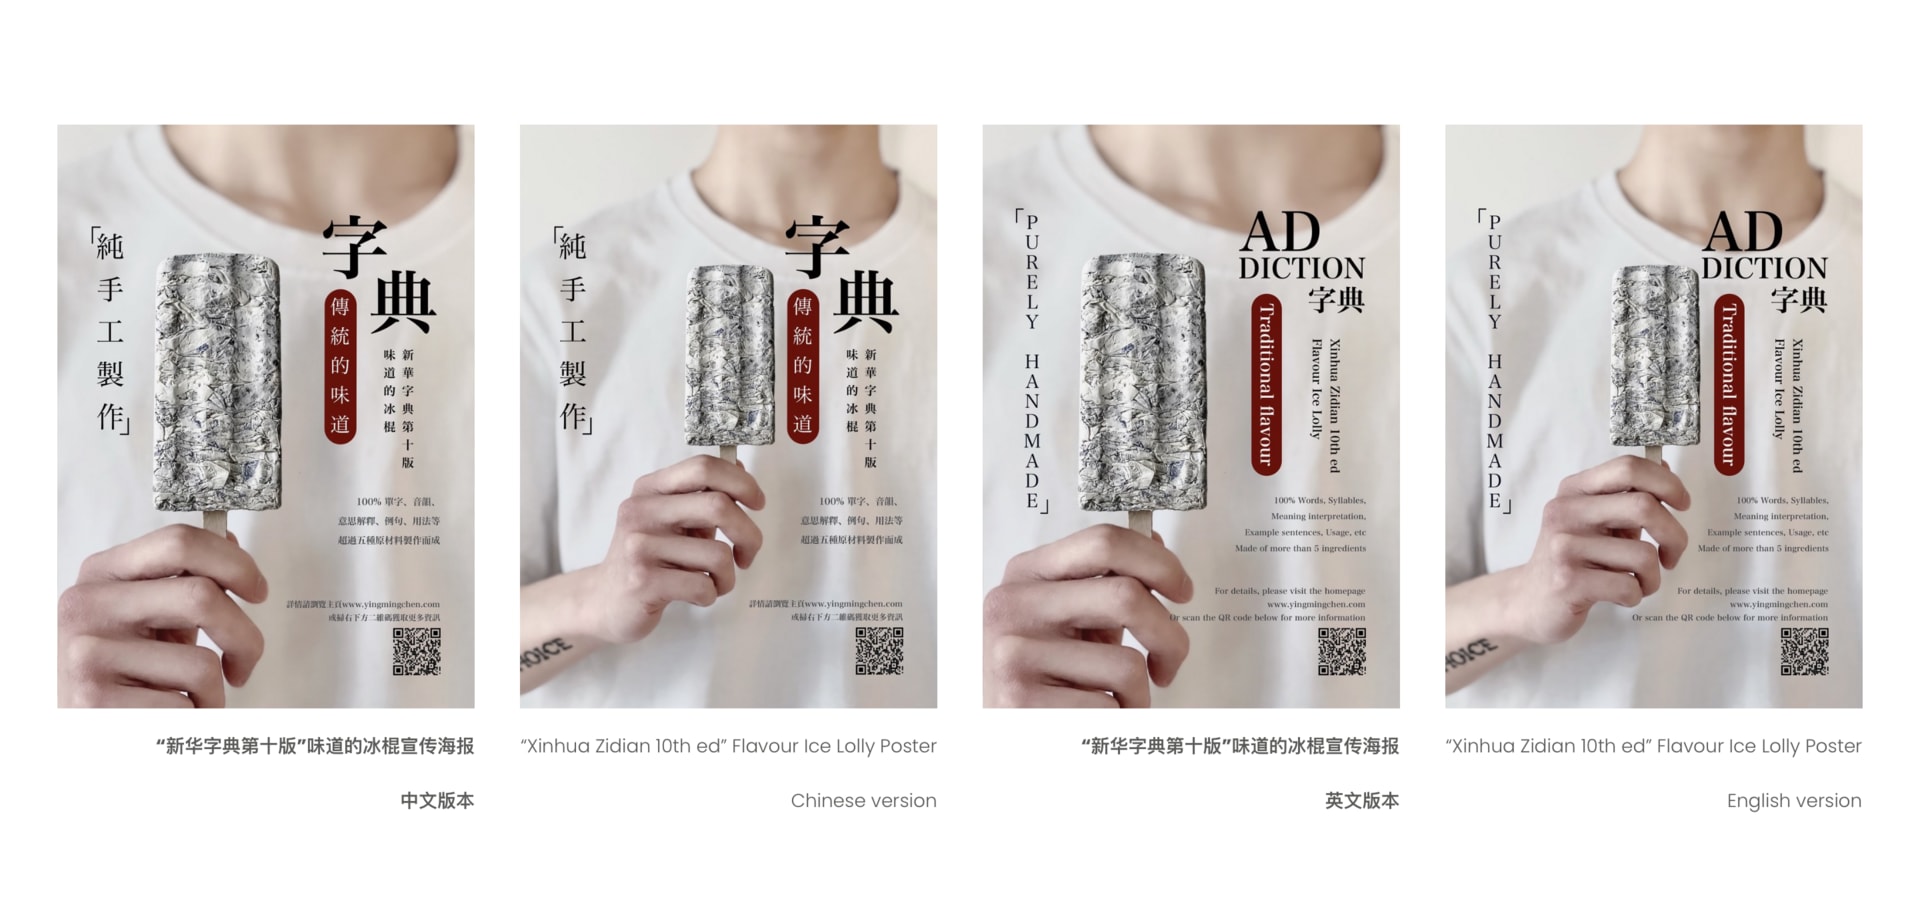 Ad Diction, Dictionary(Xinhua Zidian 10th ed), Oxford English Dictionary, Pop Sticks, White Oak